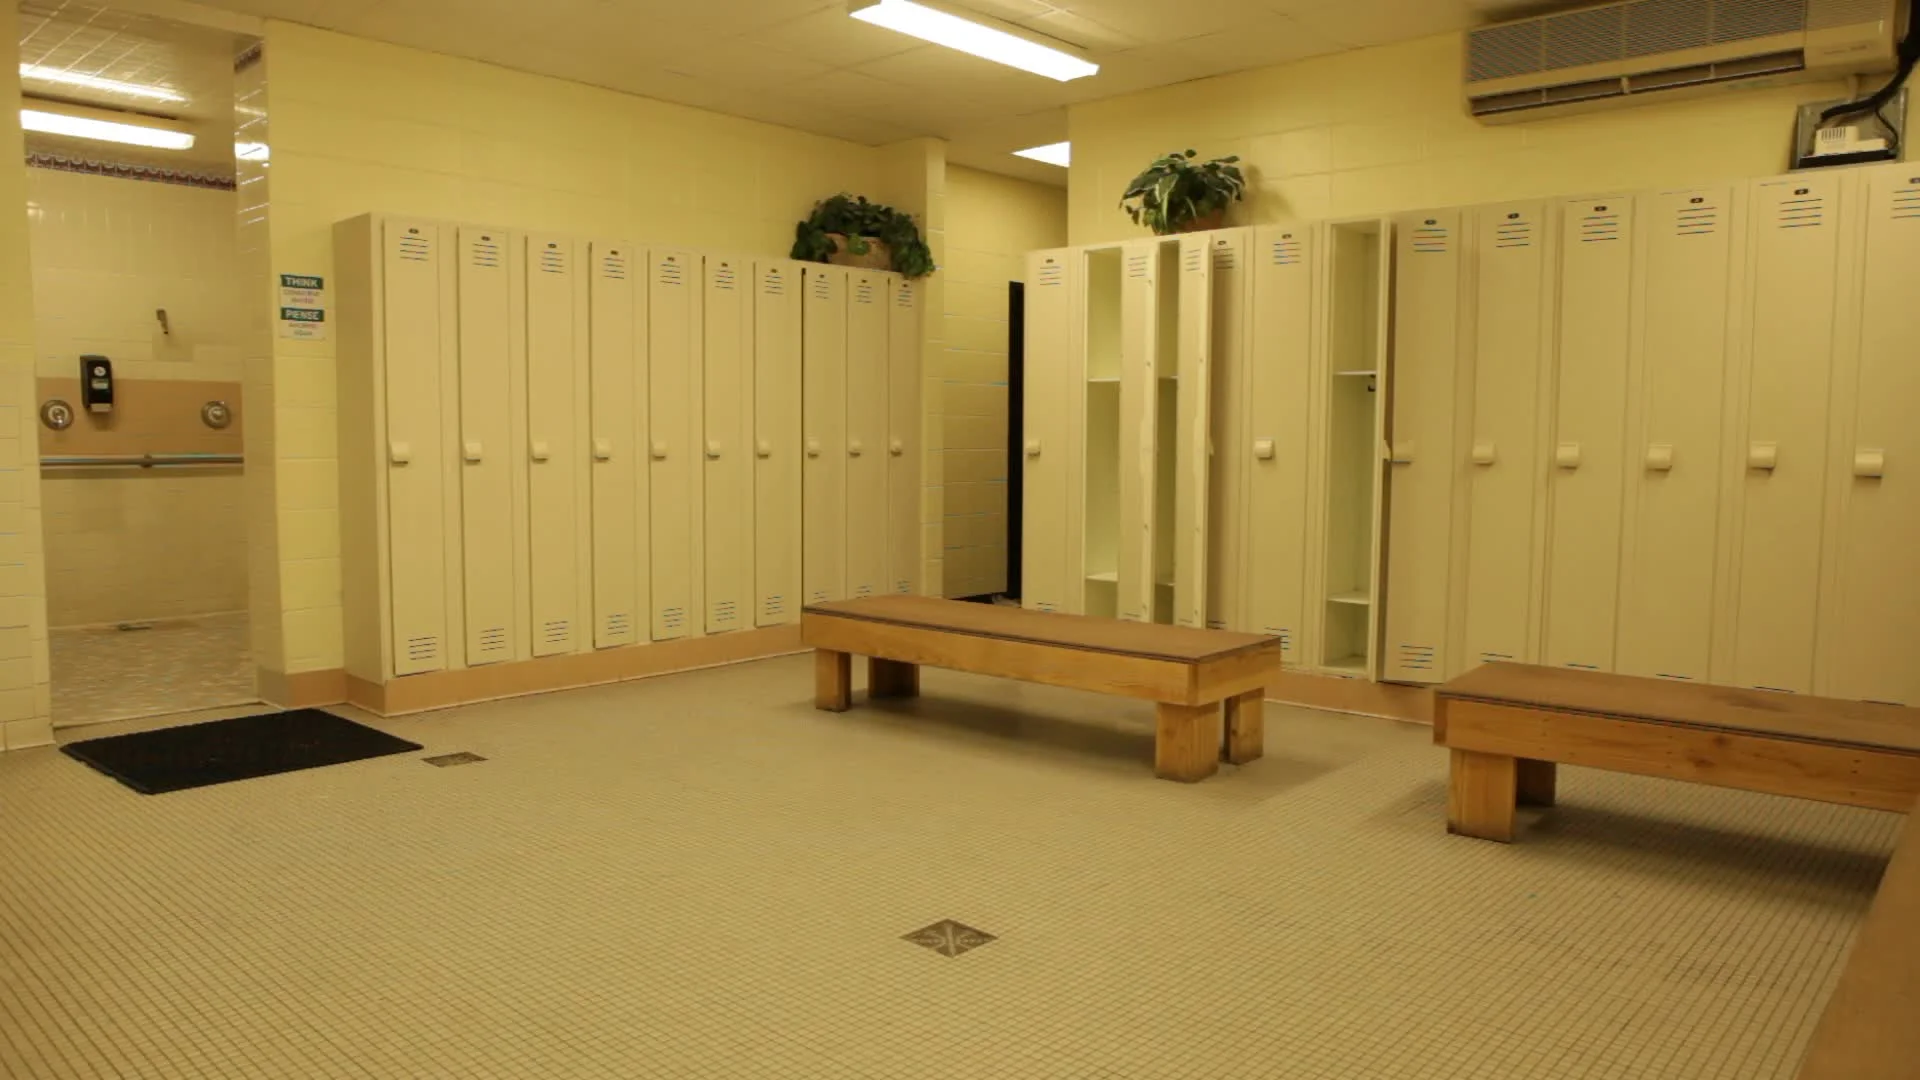 Loge de Bobby Lashley View-empty-locker-room-stock-footage-022421116_prevstill